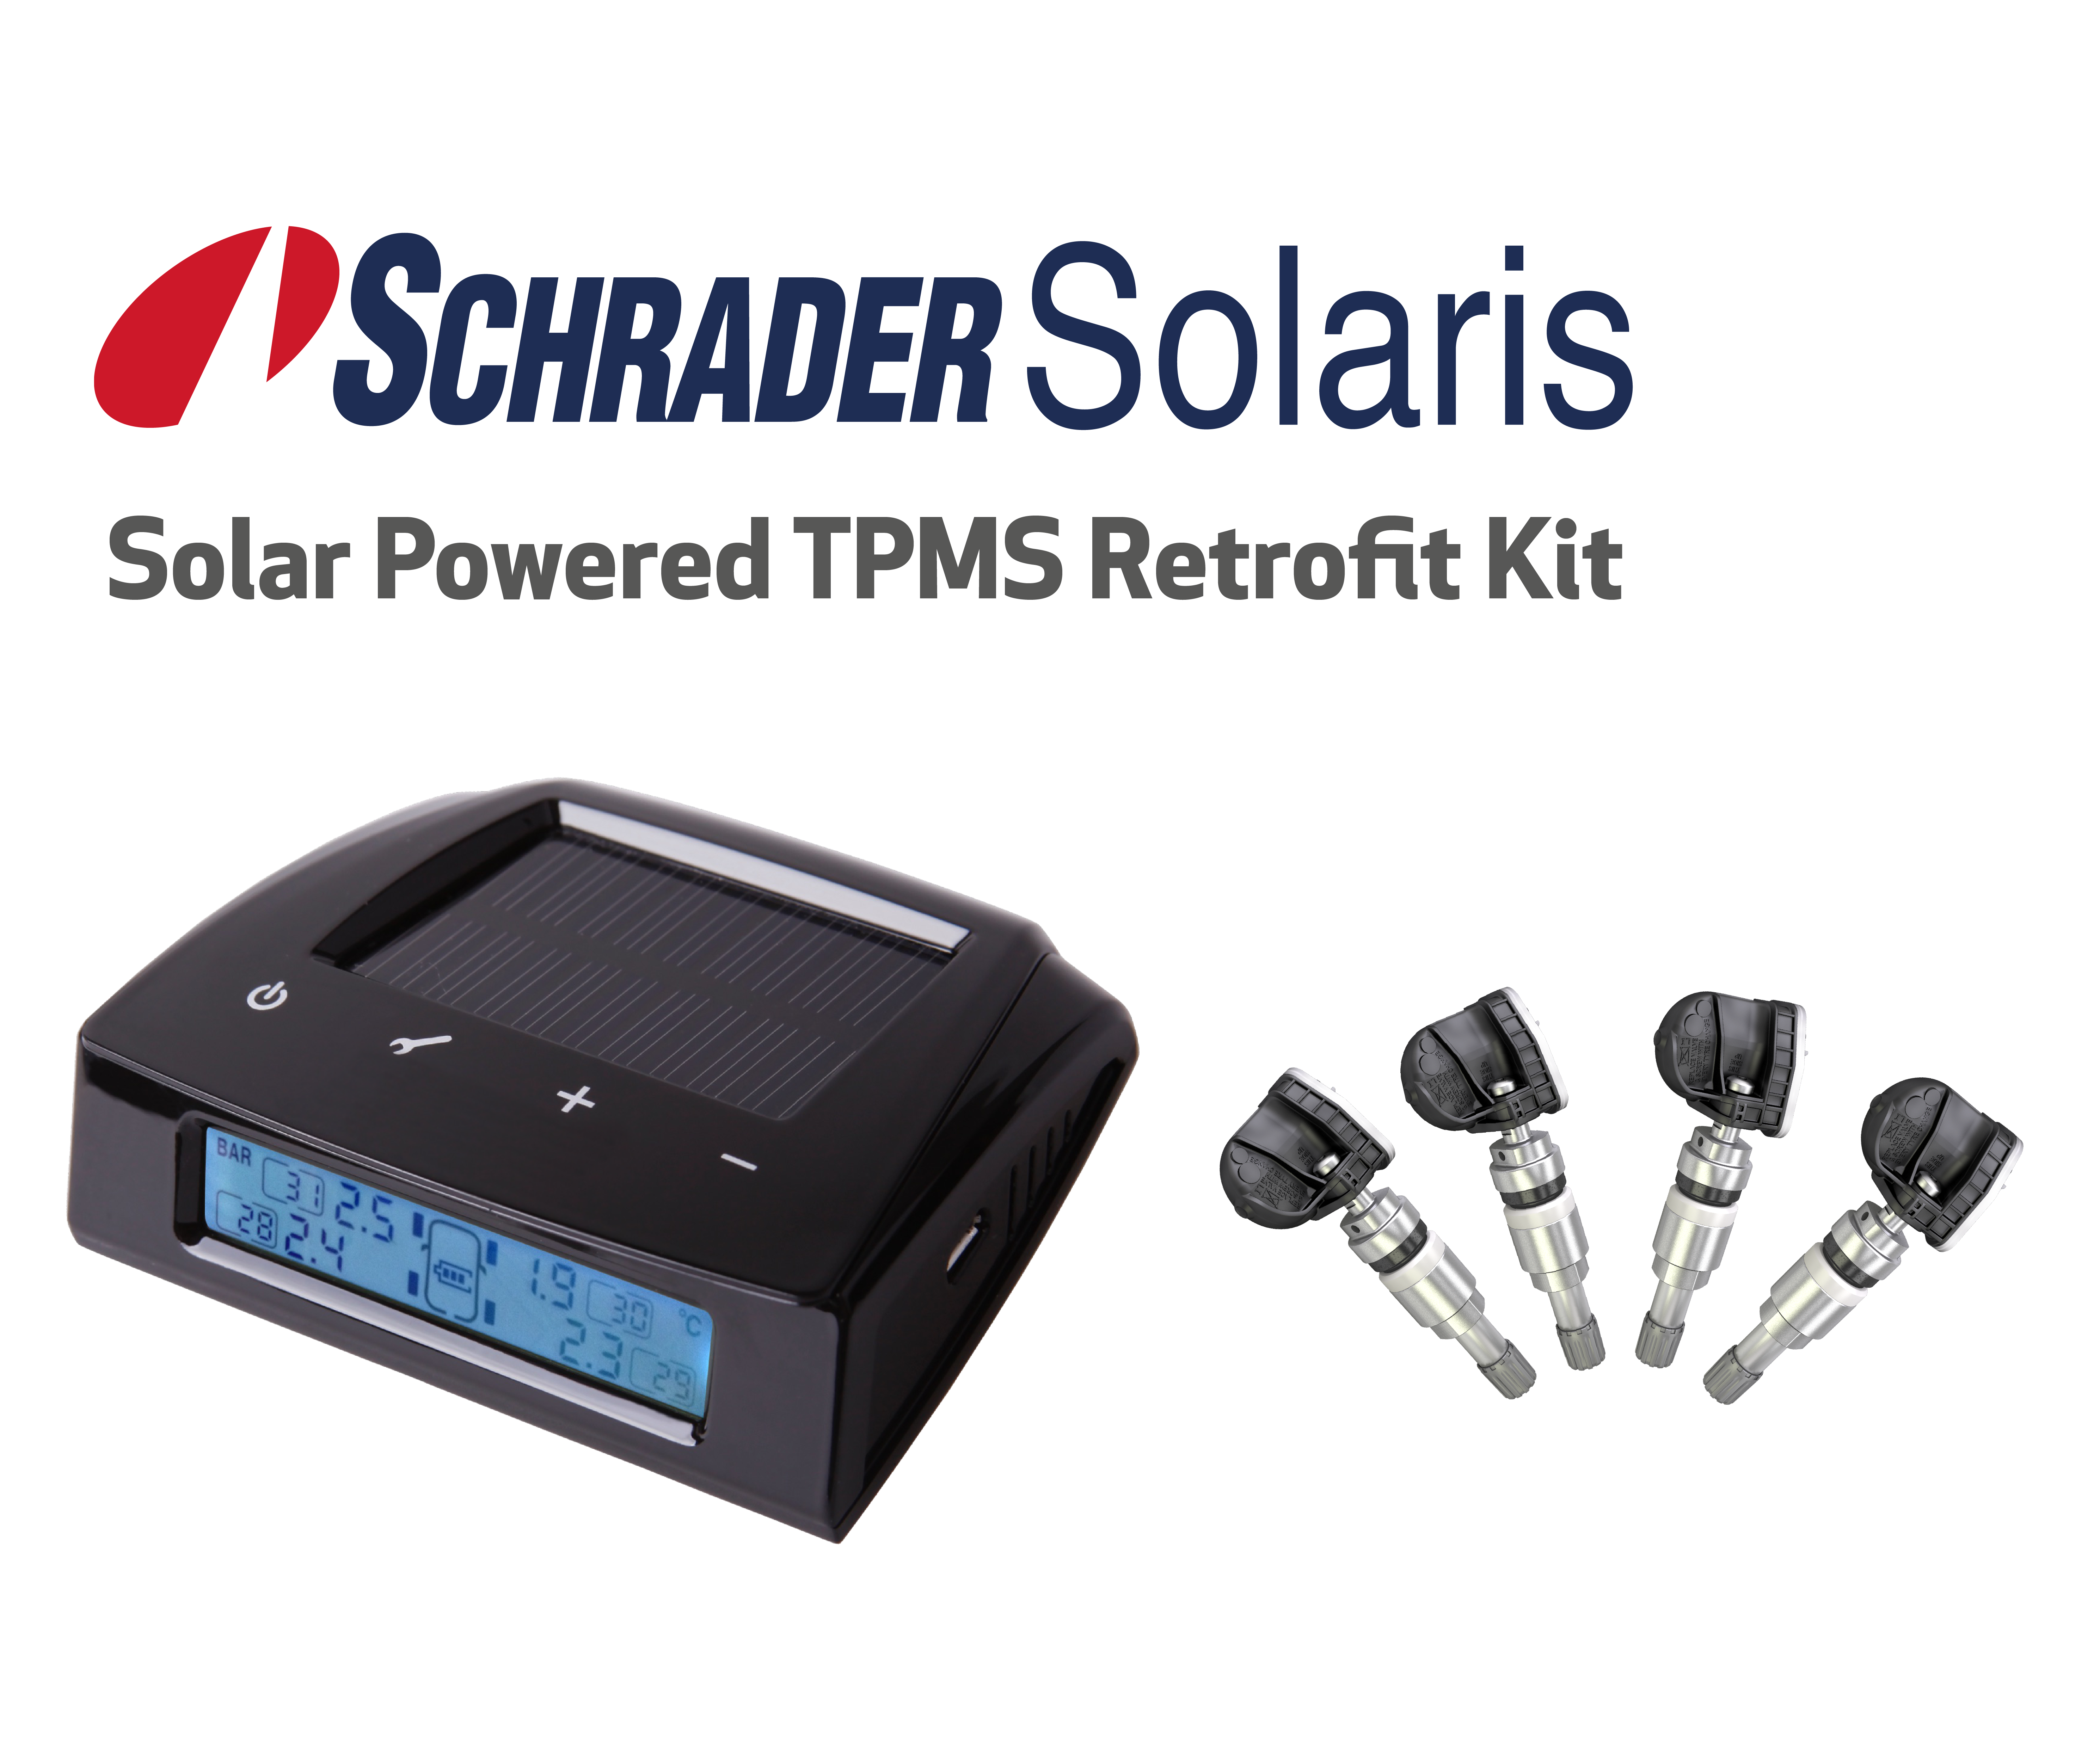 Schrader Solaris Retrofit Kit